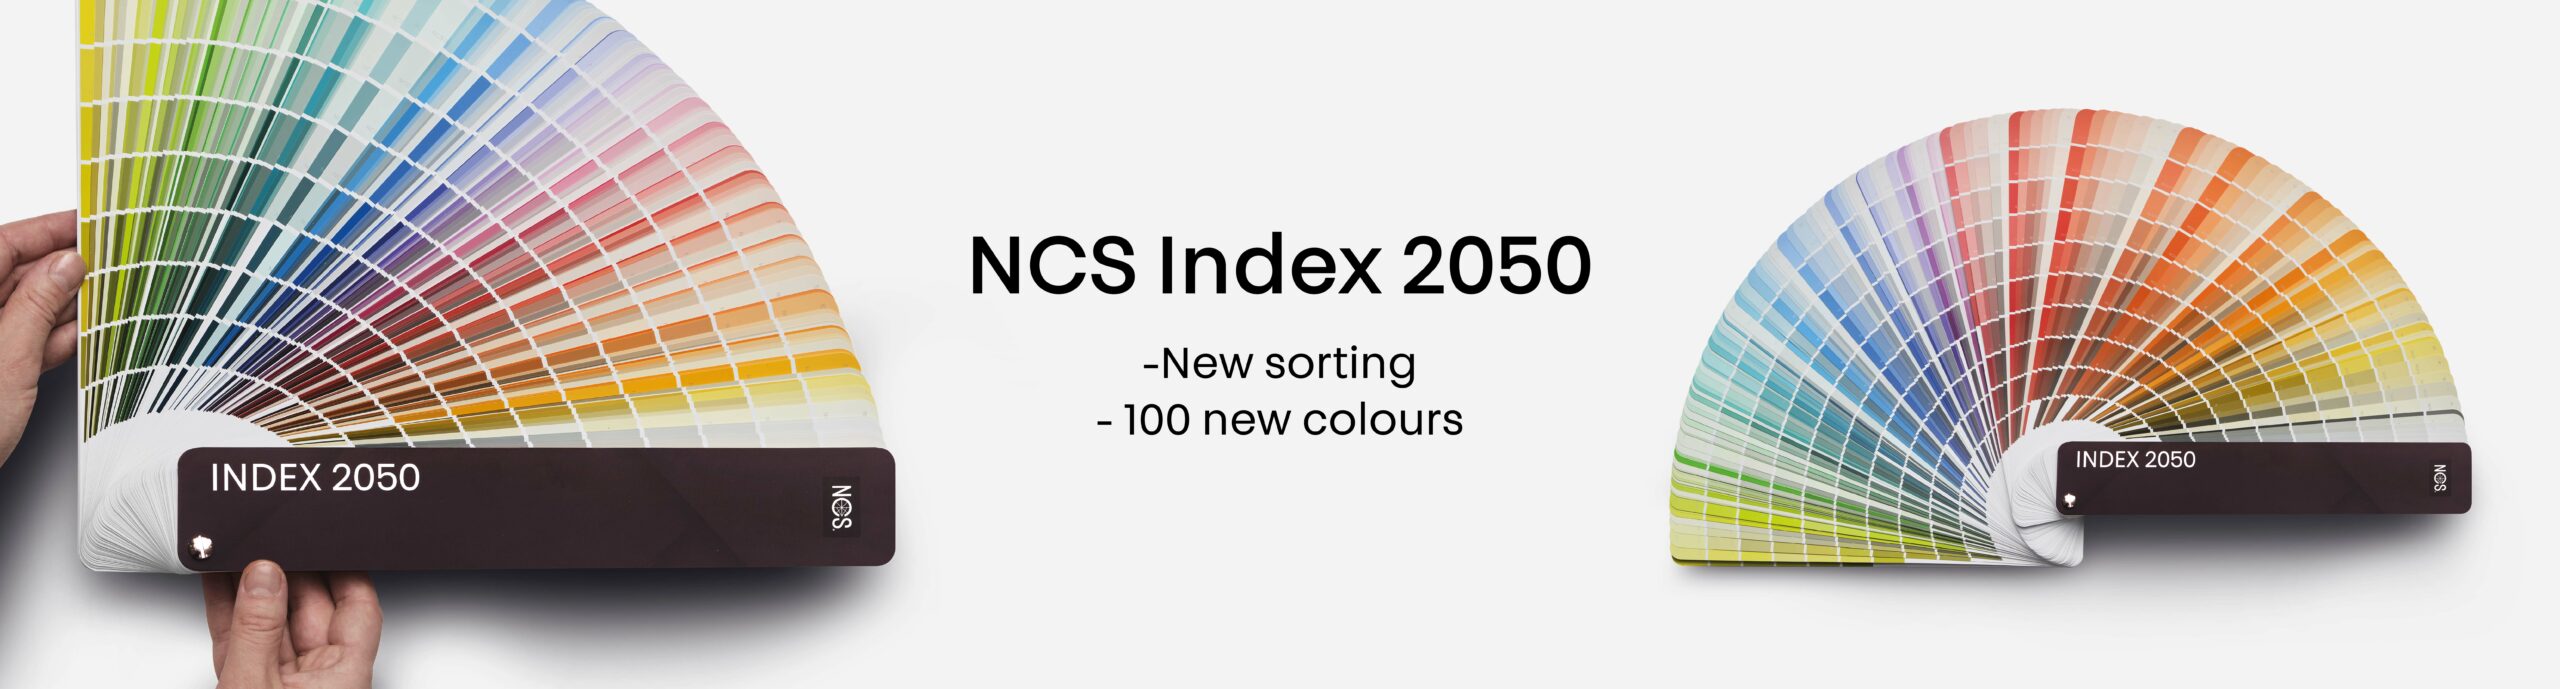 NCS Index 2050 Product Spotlight - VeriVide